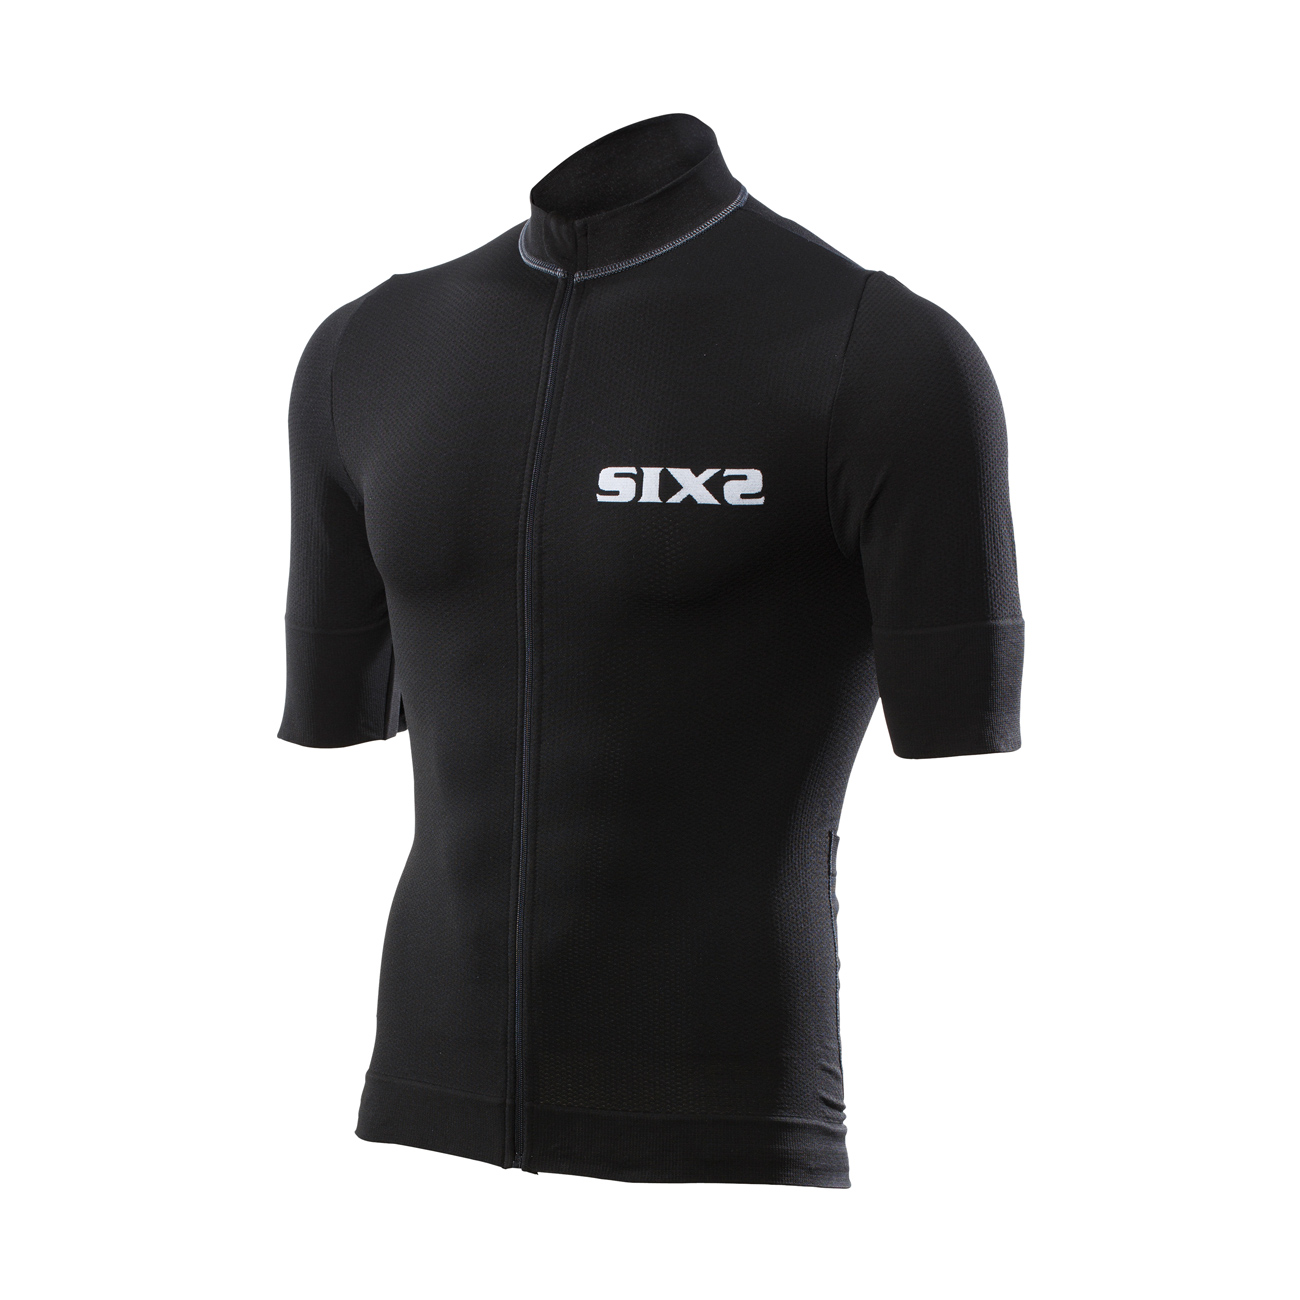 SIX2 Cyklistický dres s krátkým rukávem - BIKE3 CHROMO - černá